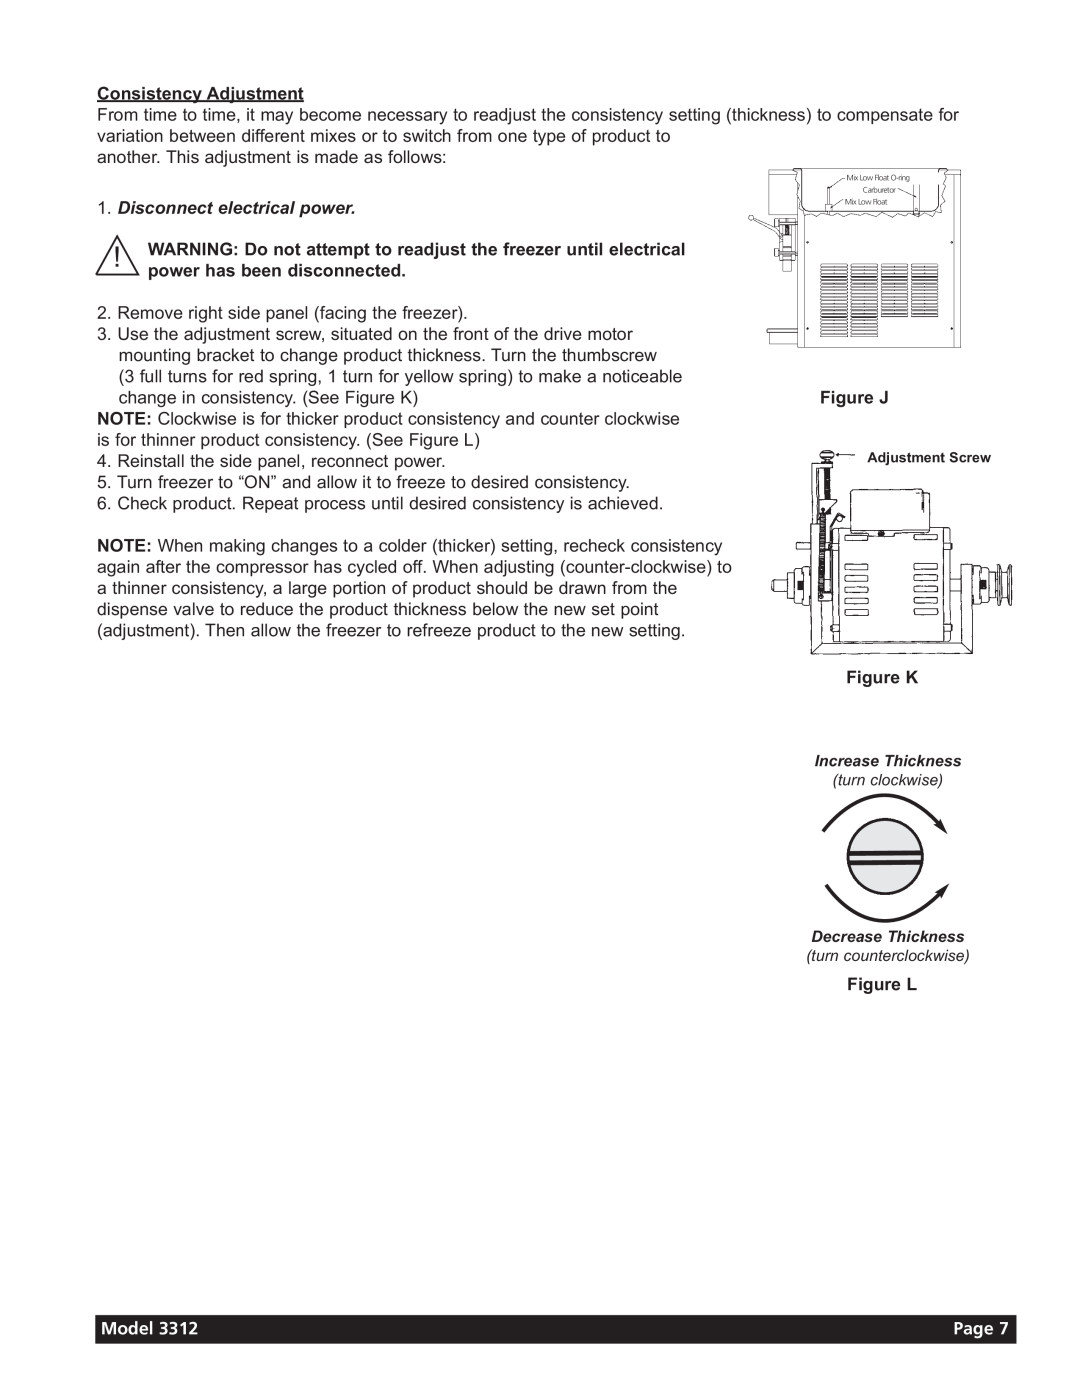 Grindmaster 3311 manual Consistency Adjustment, Disconnect electrical power, Figure J, Figure K, Figure L, Model, Page 